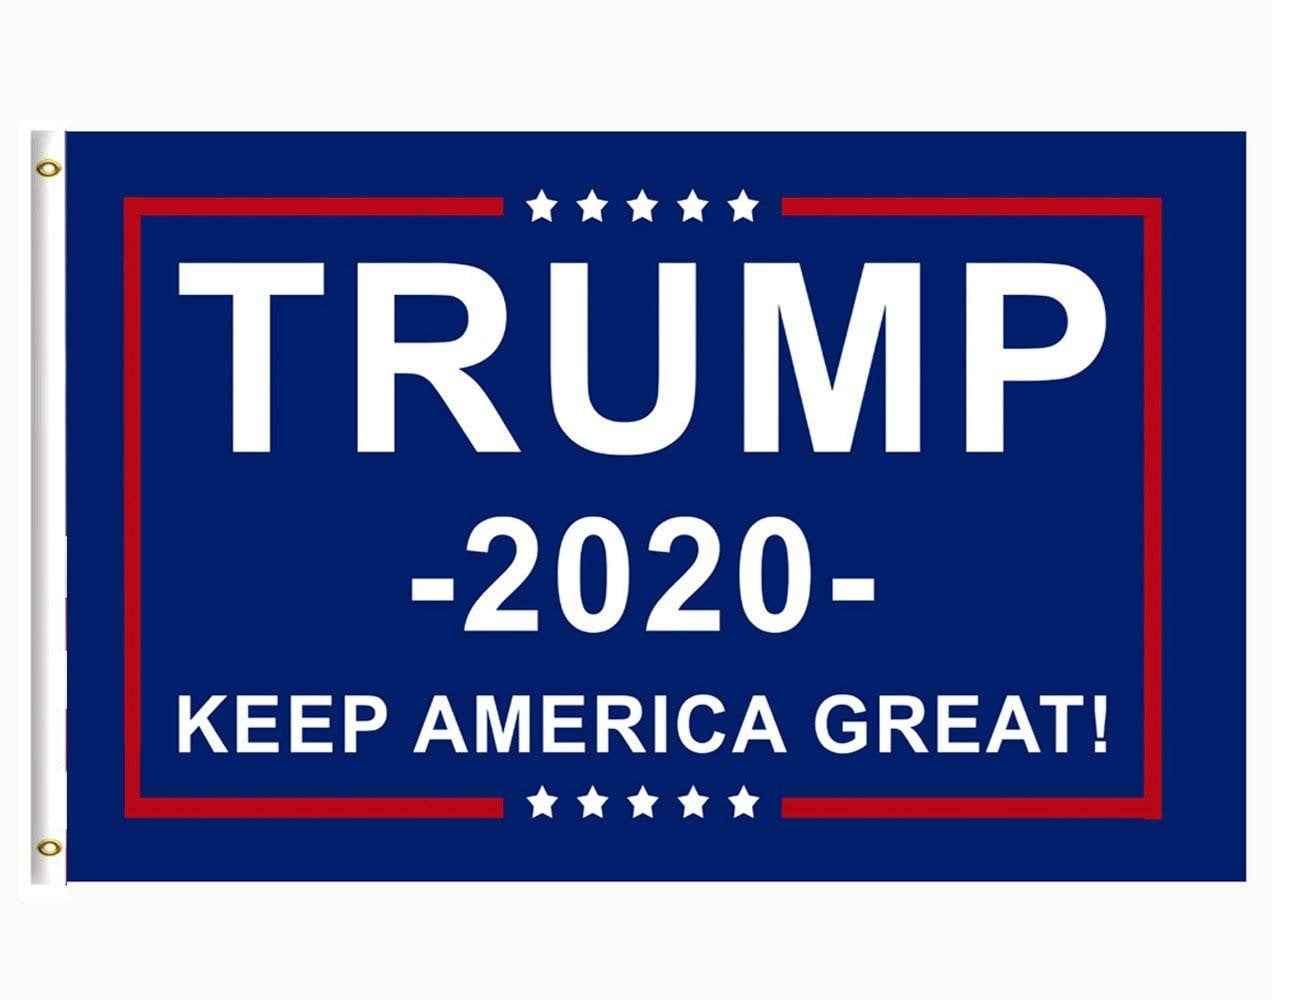 Trump 2020 MAGA COUNTRY USA President MAGA Make America Great 3x5 Ft Flag US